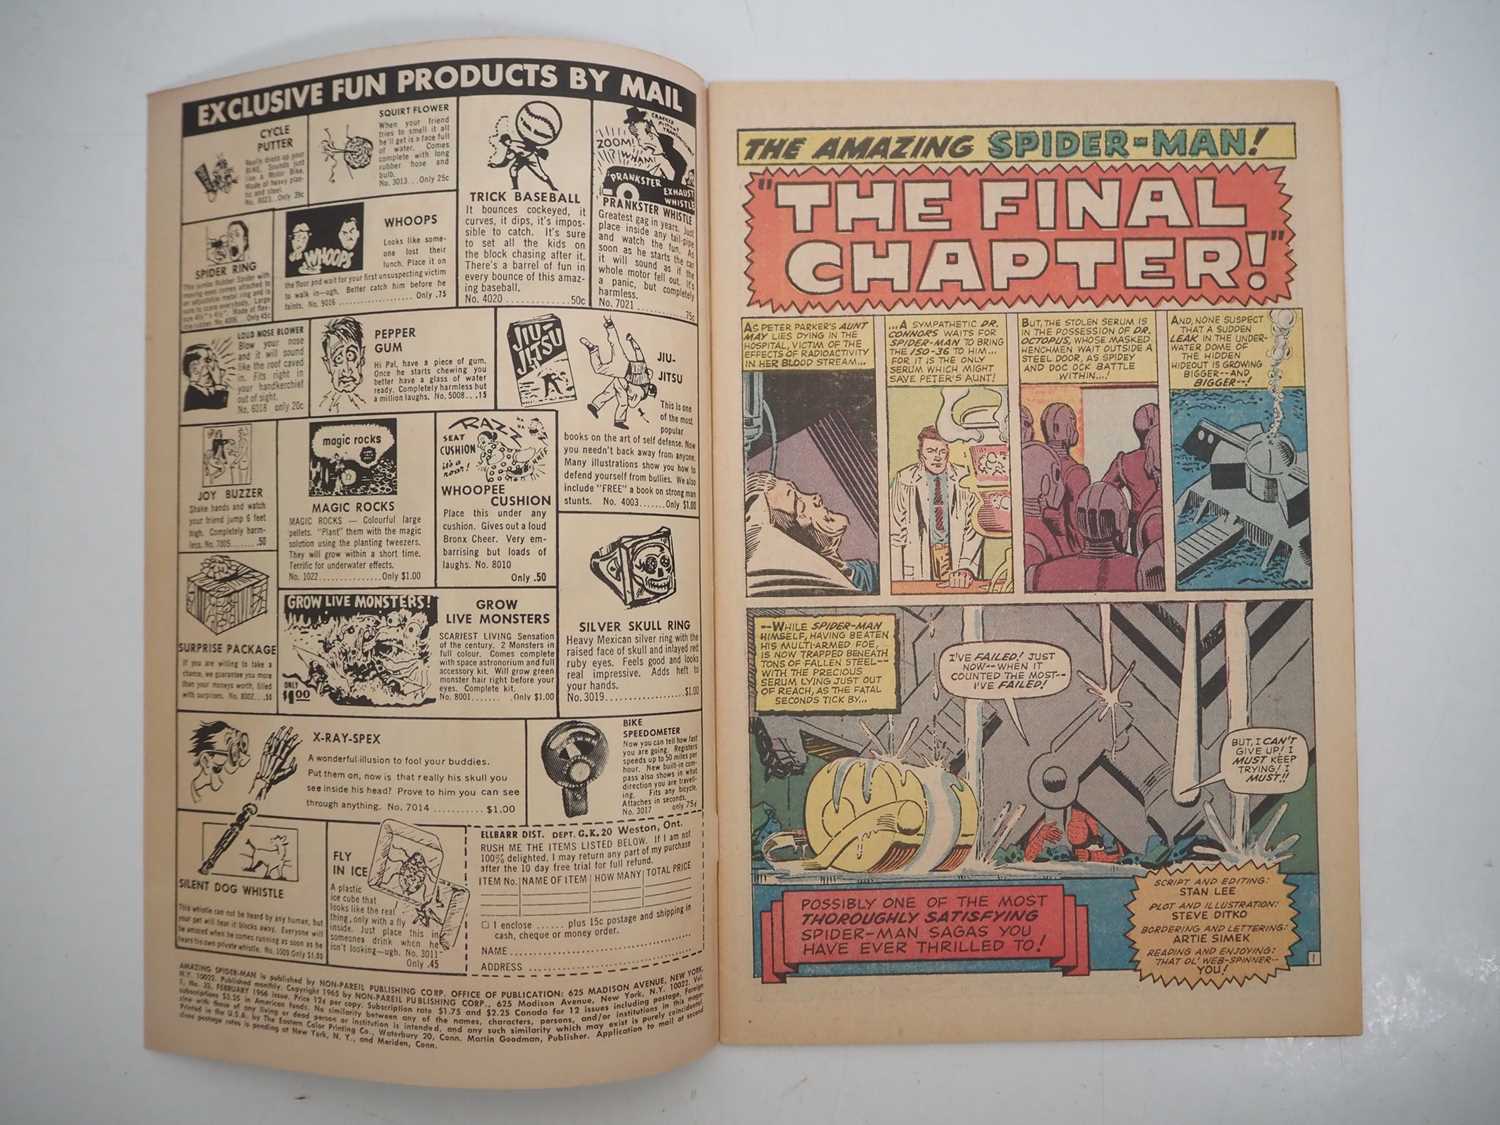 AMAZING SPIDER-MAN #33 - (1966 - MARVEL) - Classic Steve Ditko Spider-Man cover + Spider-Man battles - Image 3 of 9